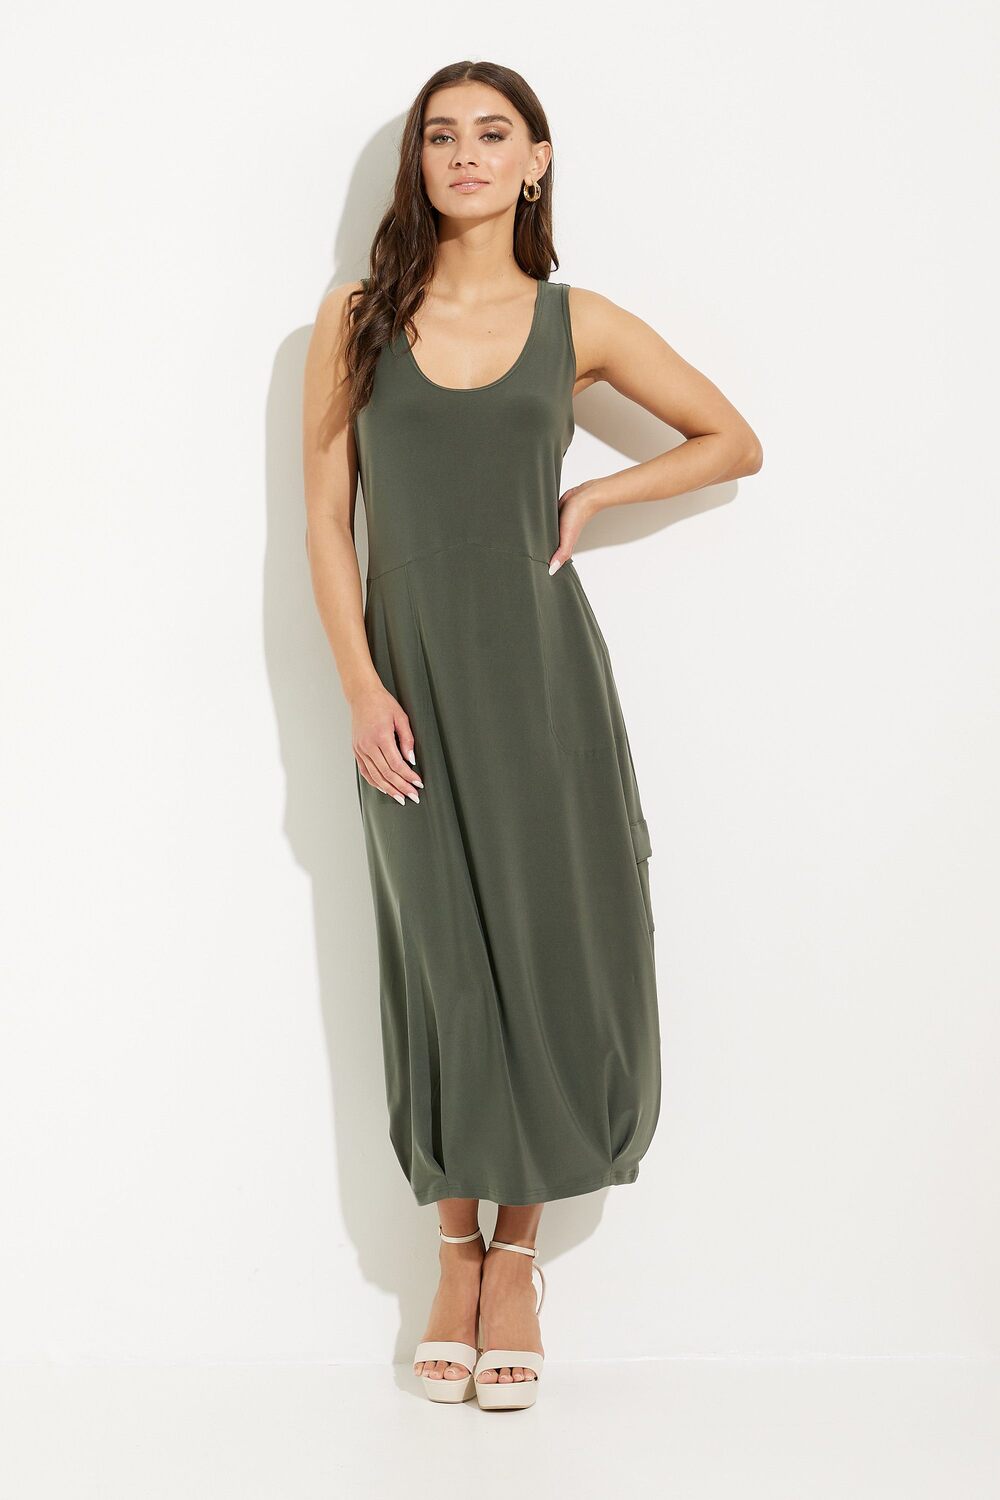 Pleated Hem Tank Dress Style 28131. Melange Olive